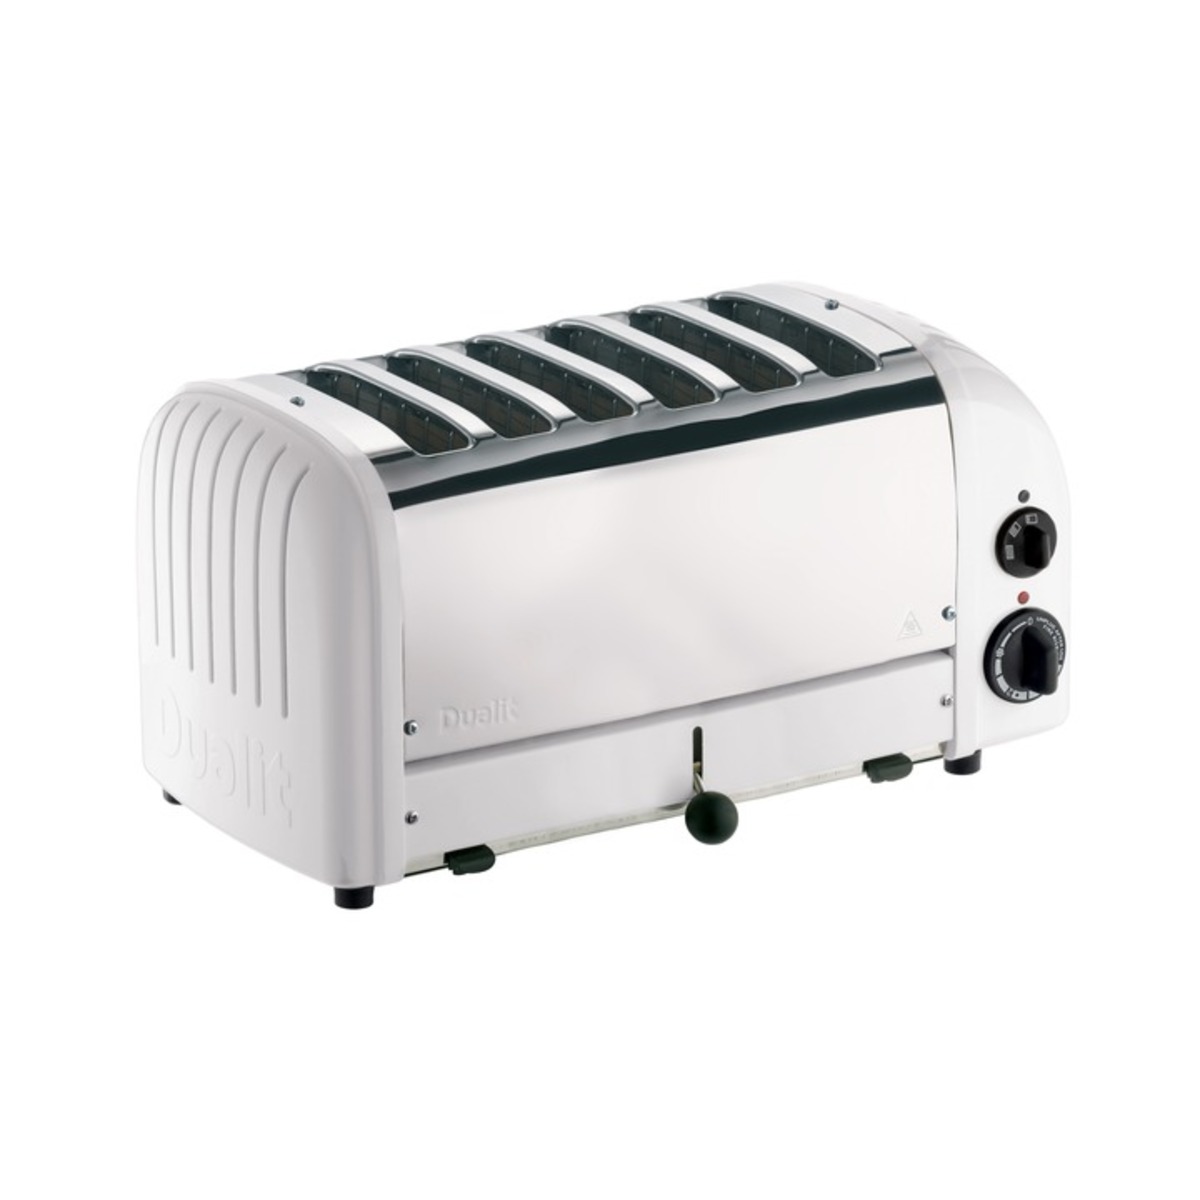 Dualit 60146 6 Slot Classic Toaster, White